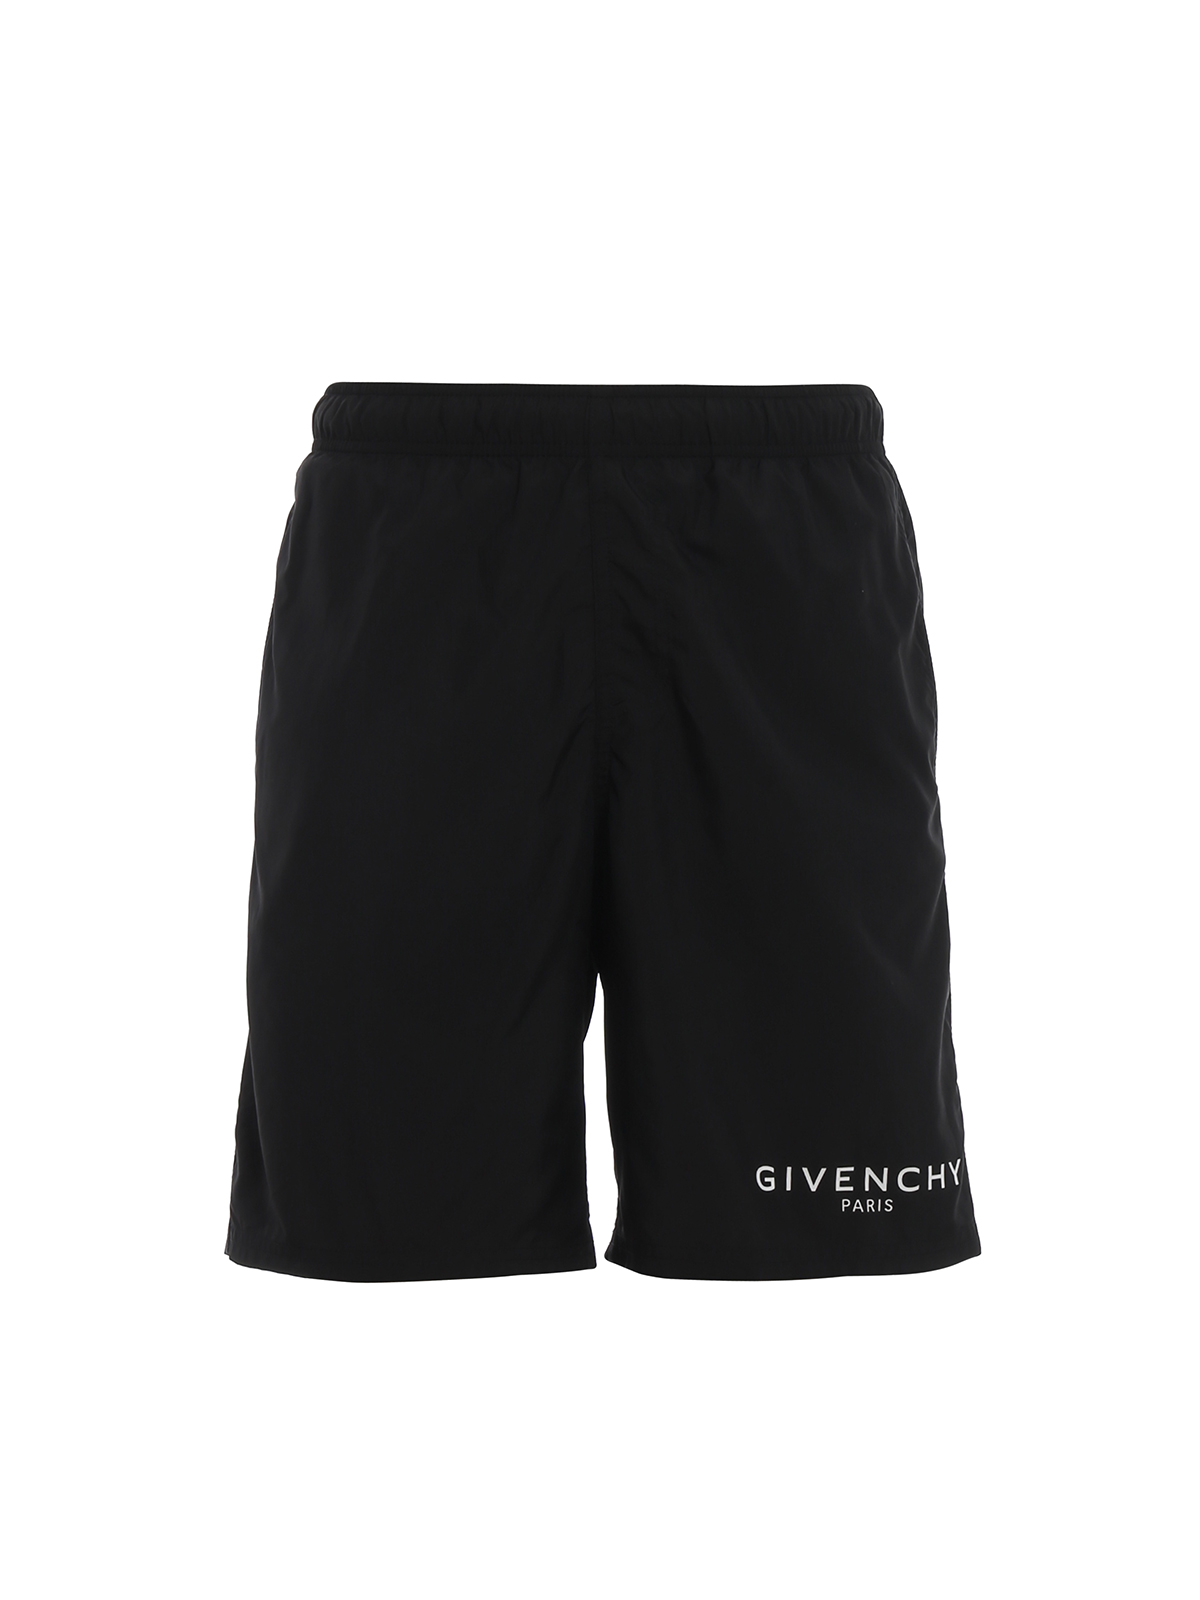 black givenchy swim shorts